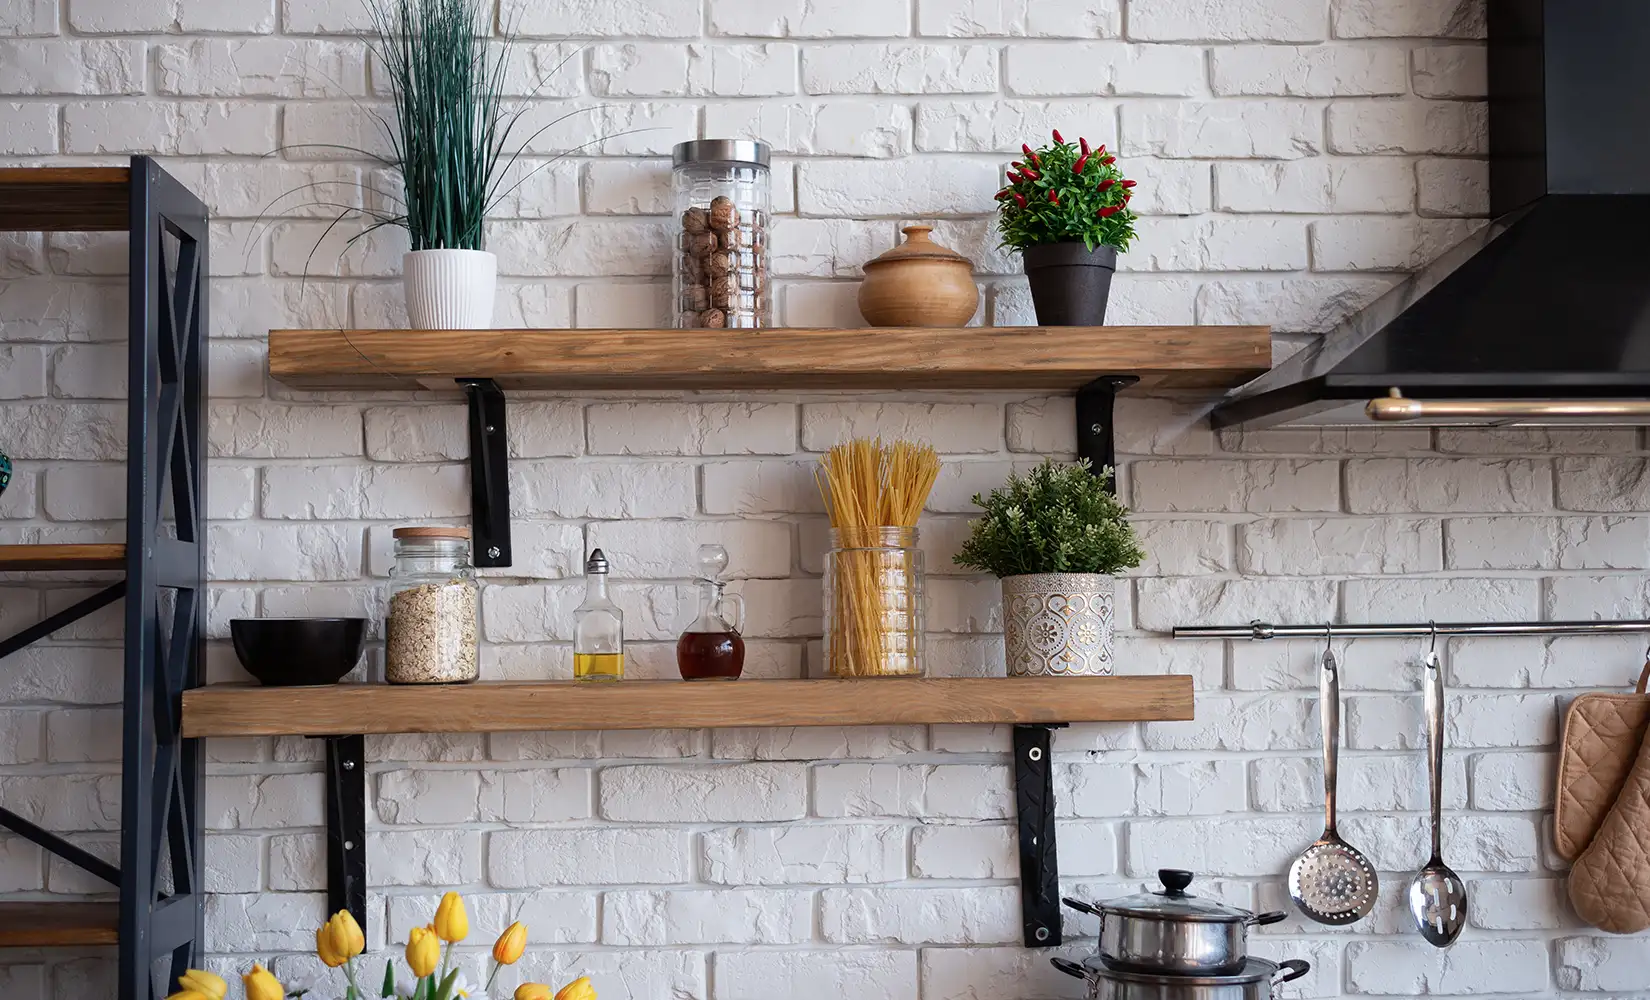 Reclaimed wood shelves mounted on white tile backsplash holding kitchen supplies.